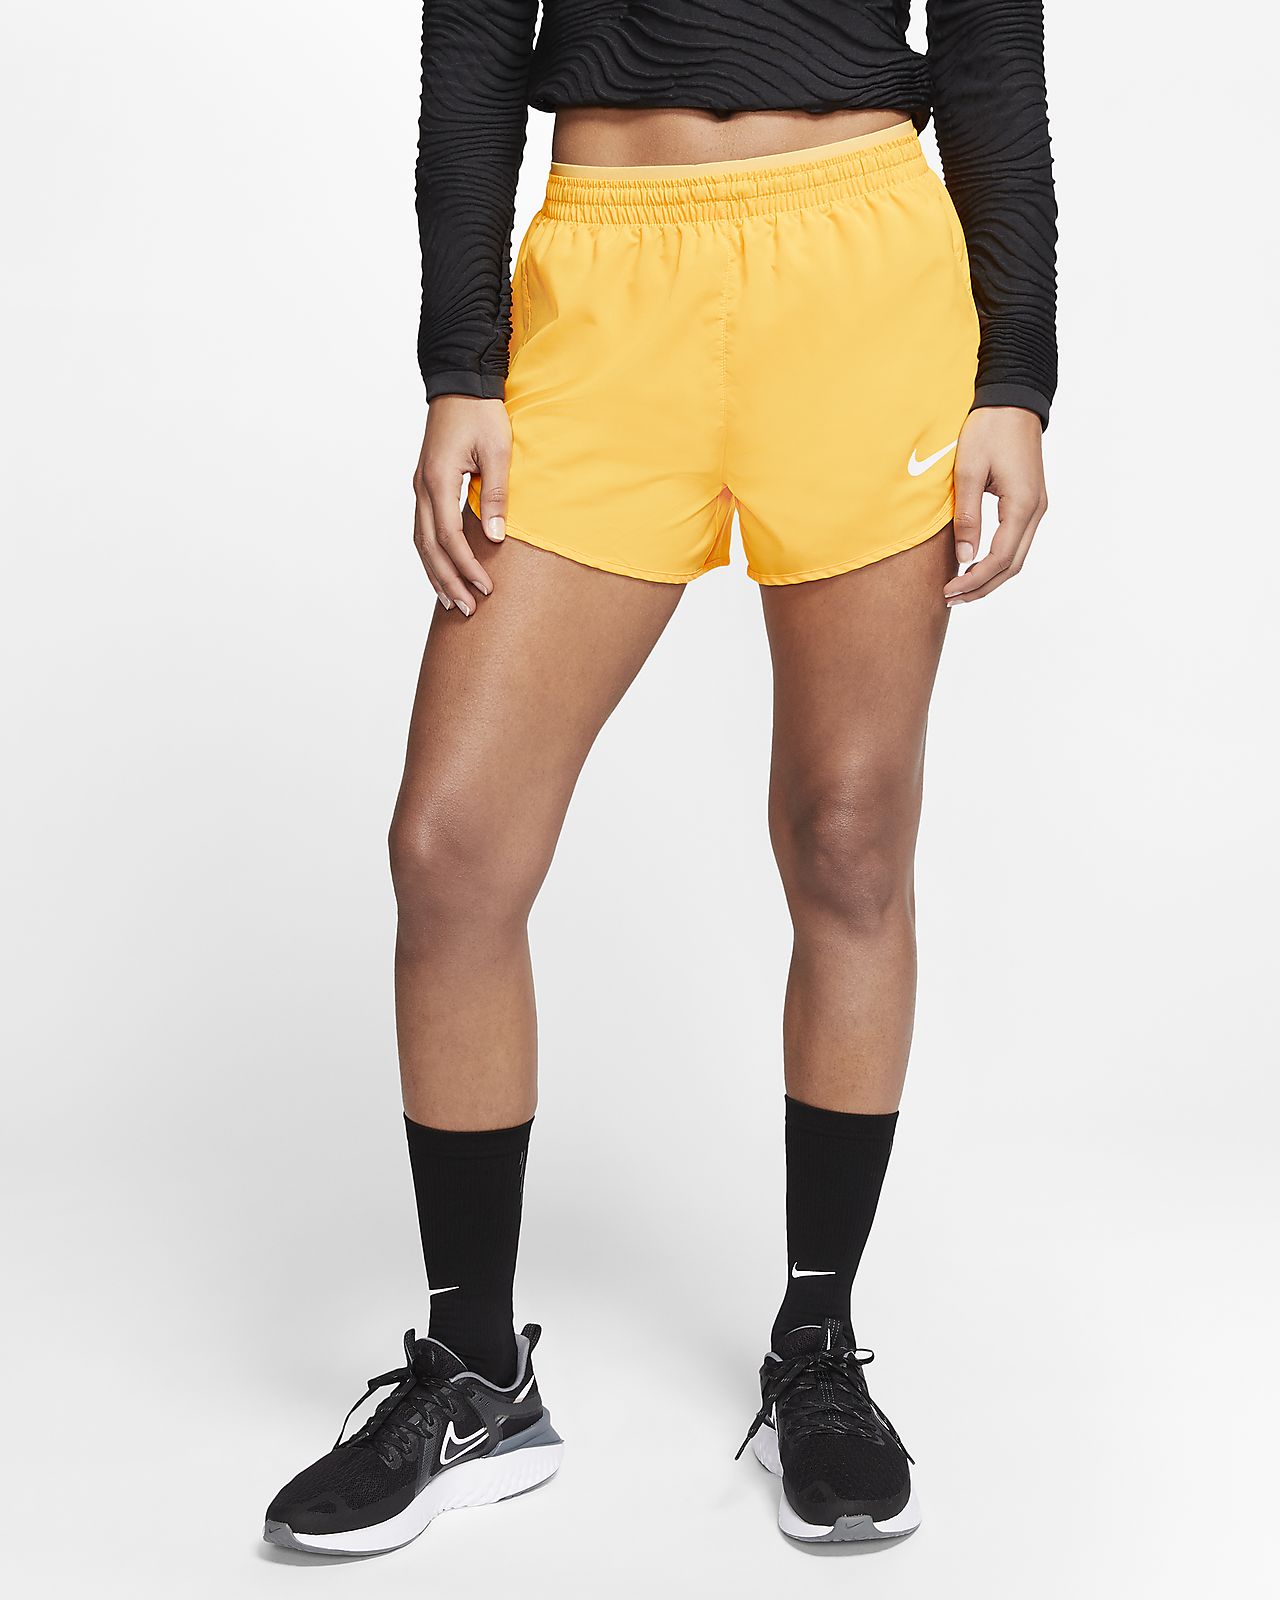 nike women's running shorts with zipper pocket